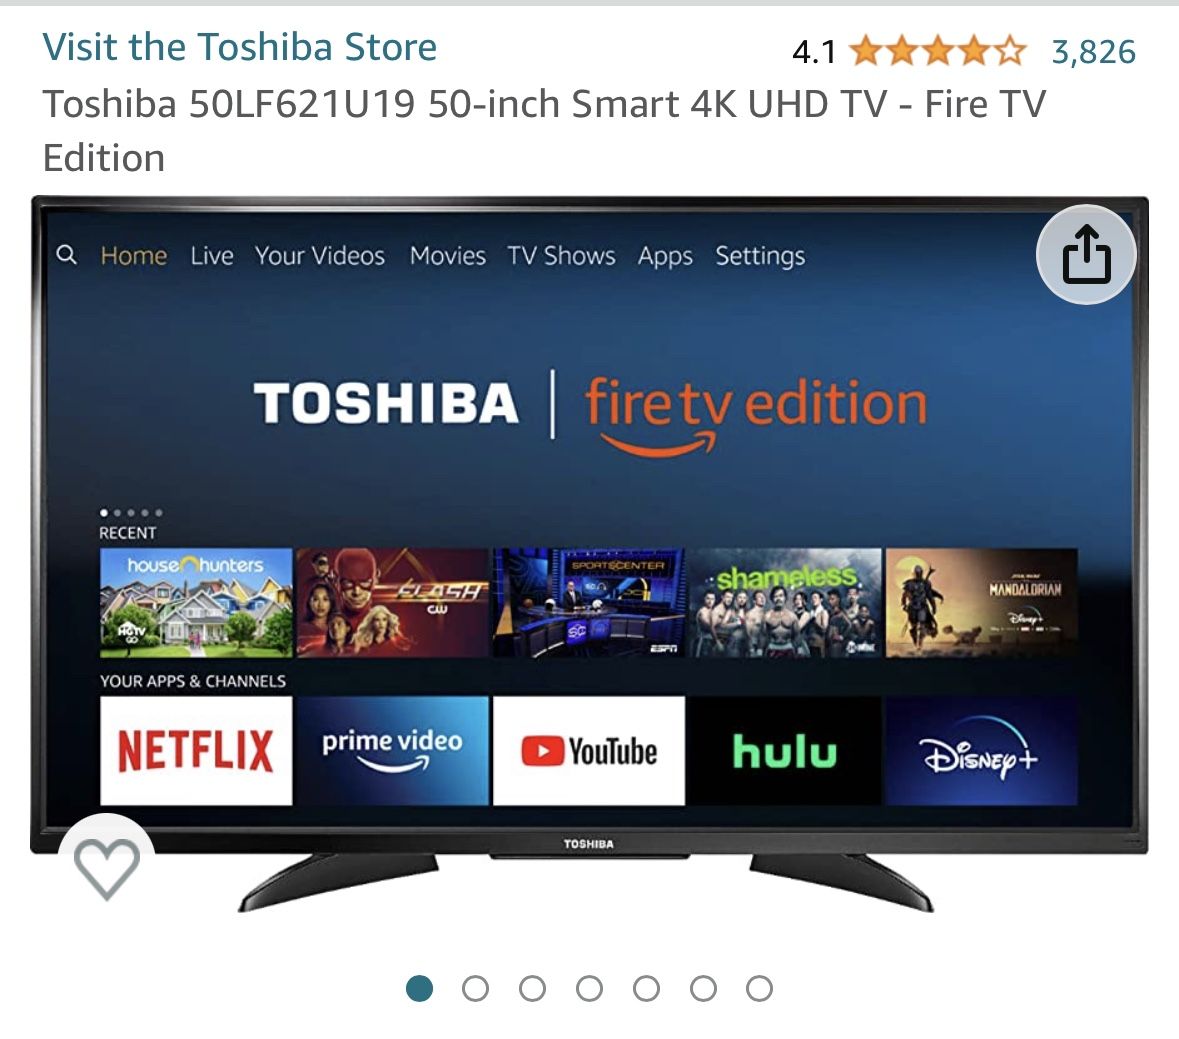 Toshiba 50LF621U19 50-inch Smart 4K UHD TV - Fire TV Edition